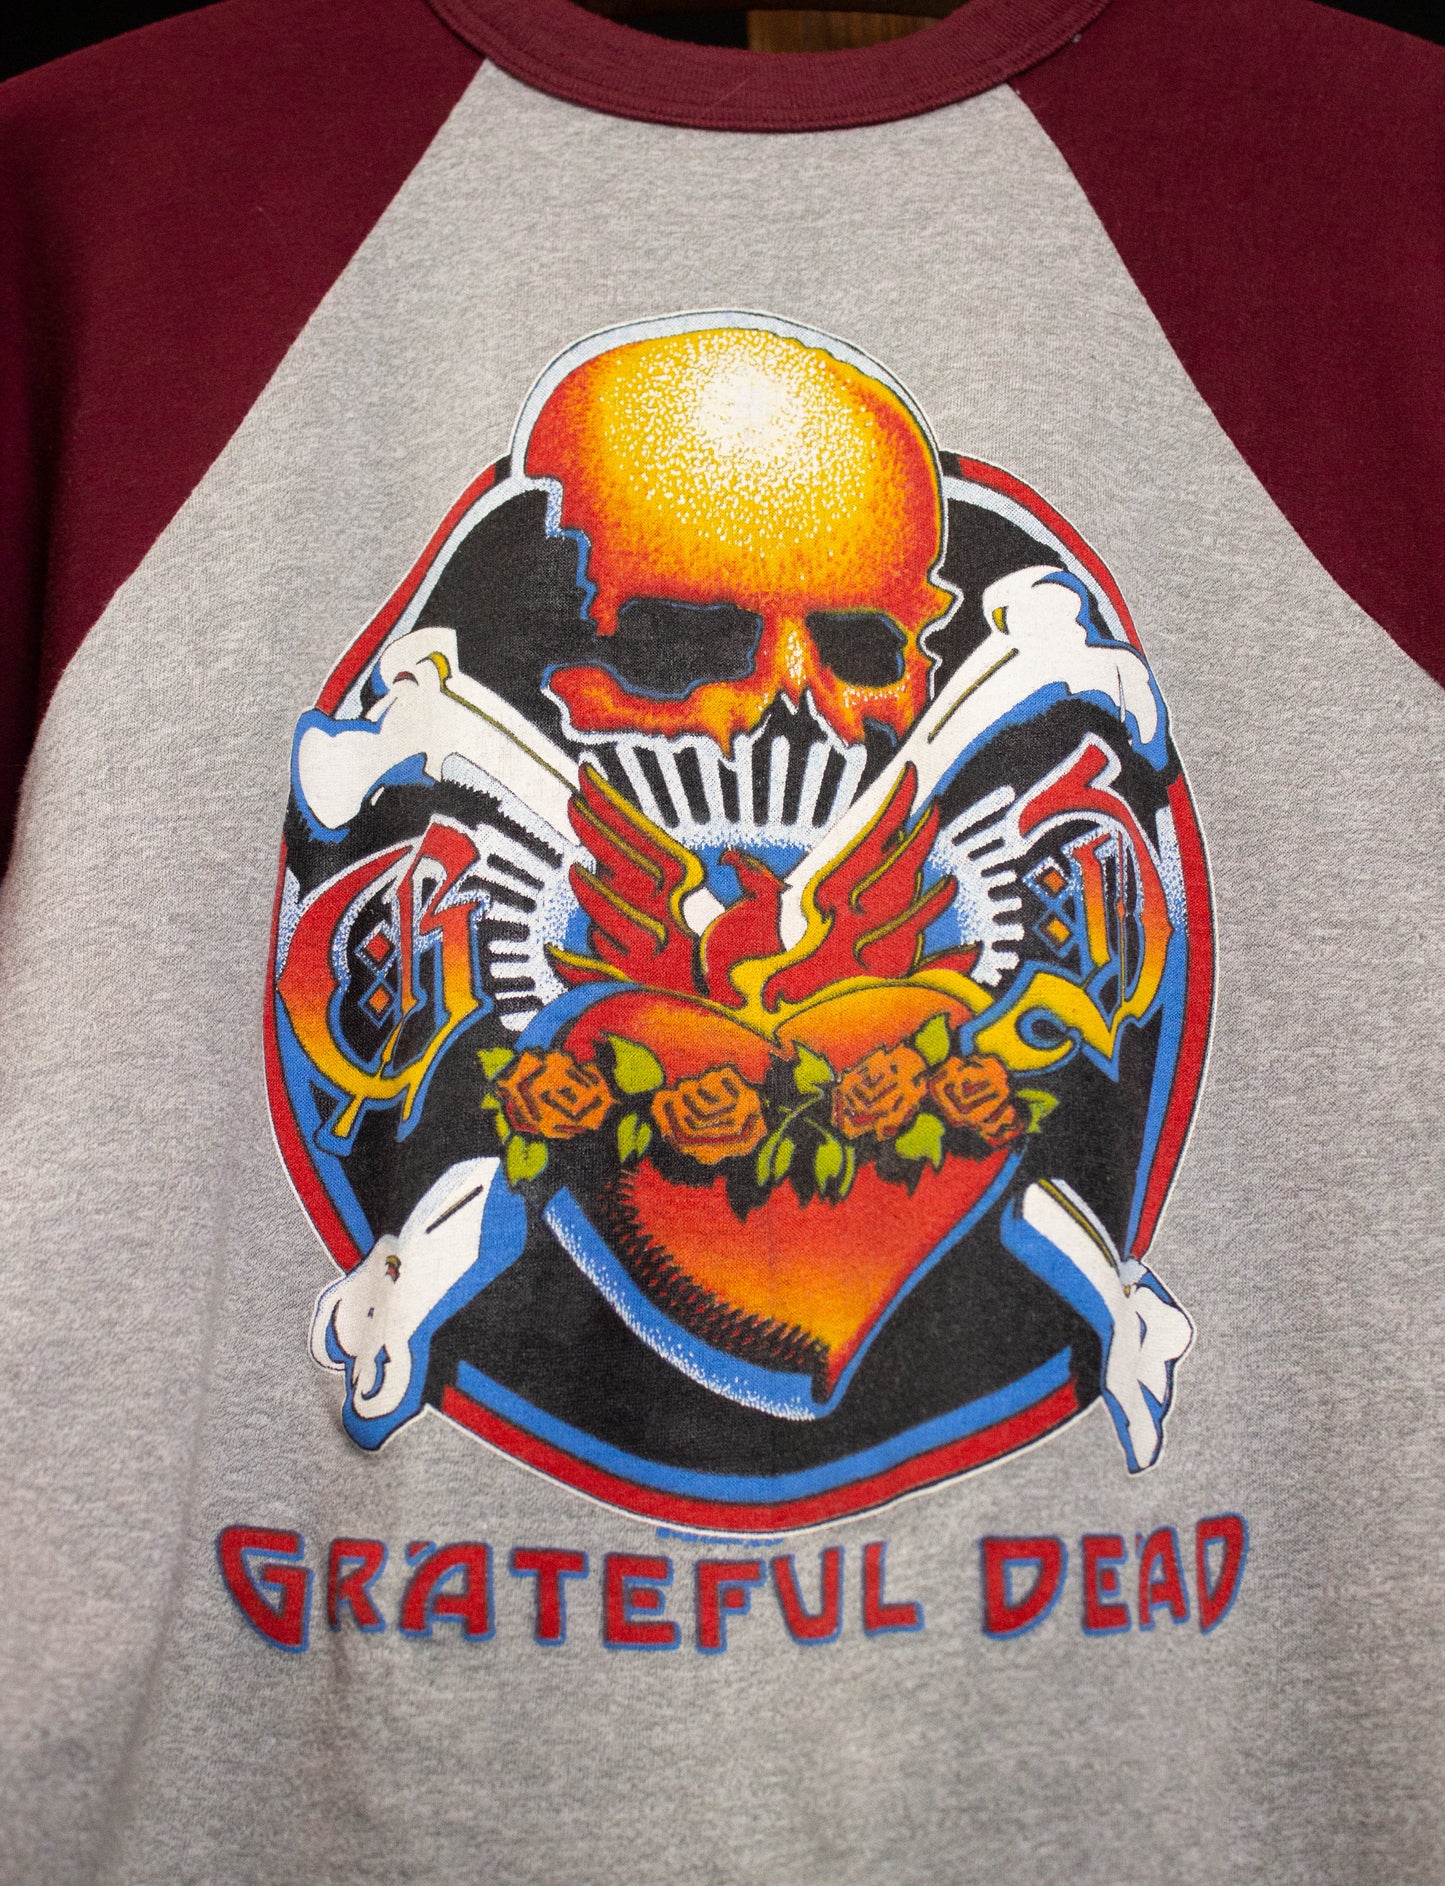 Vintage 1979 Grateful Dead Raglan Concert T Shirt Maroon and Gray Medium